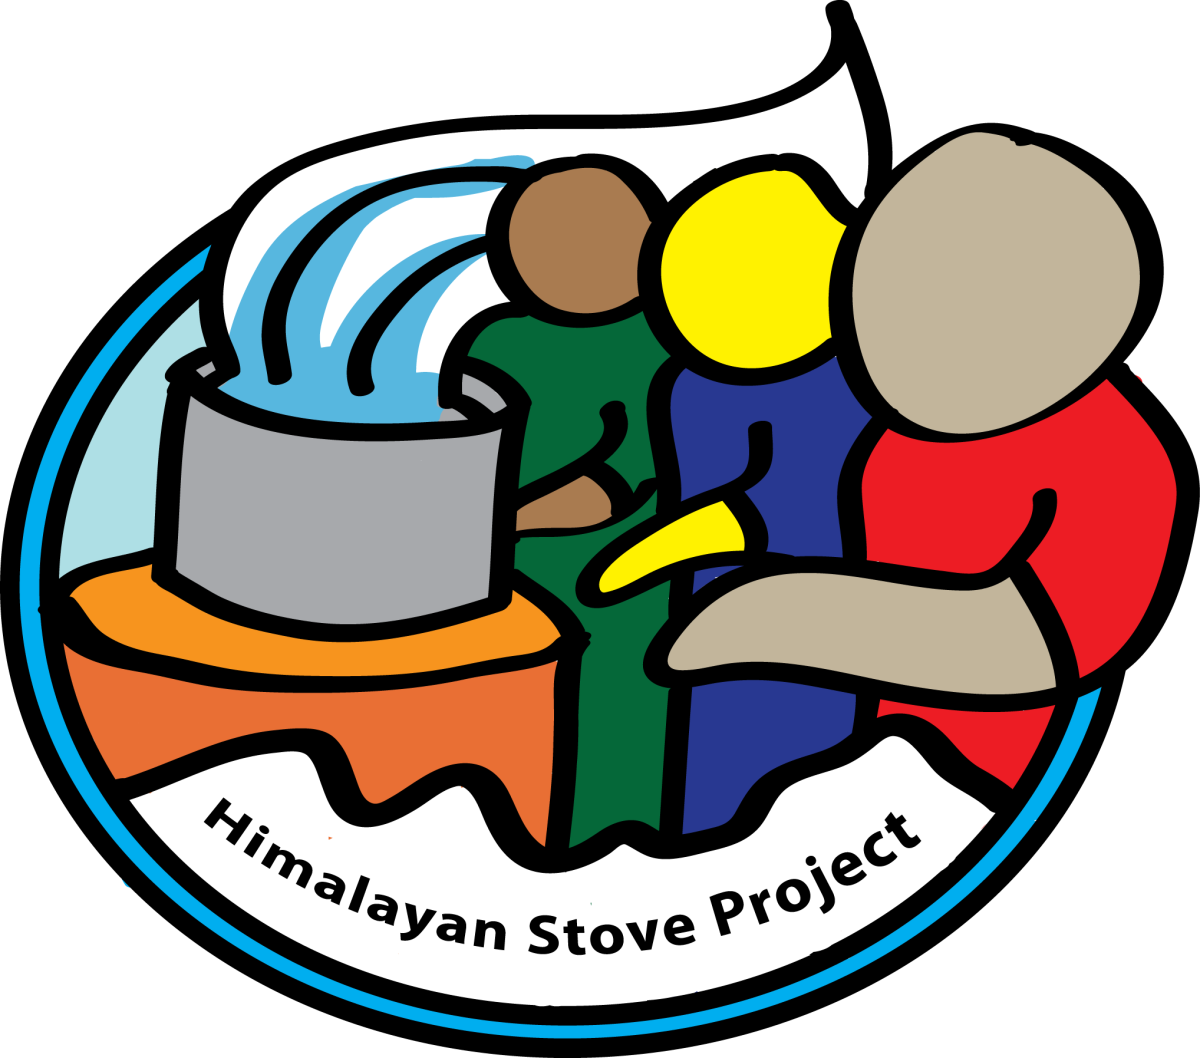 Himalayan Stove Project - Stove (1920x1693)